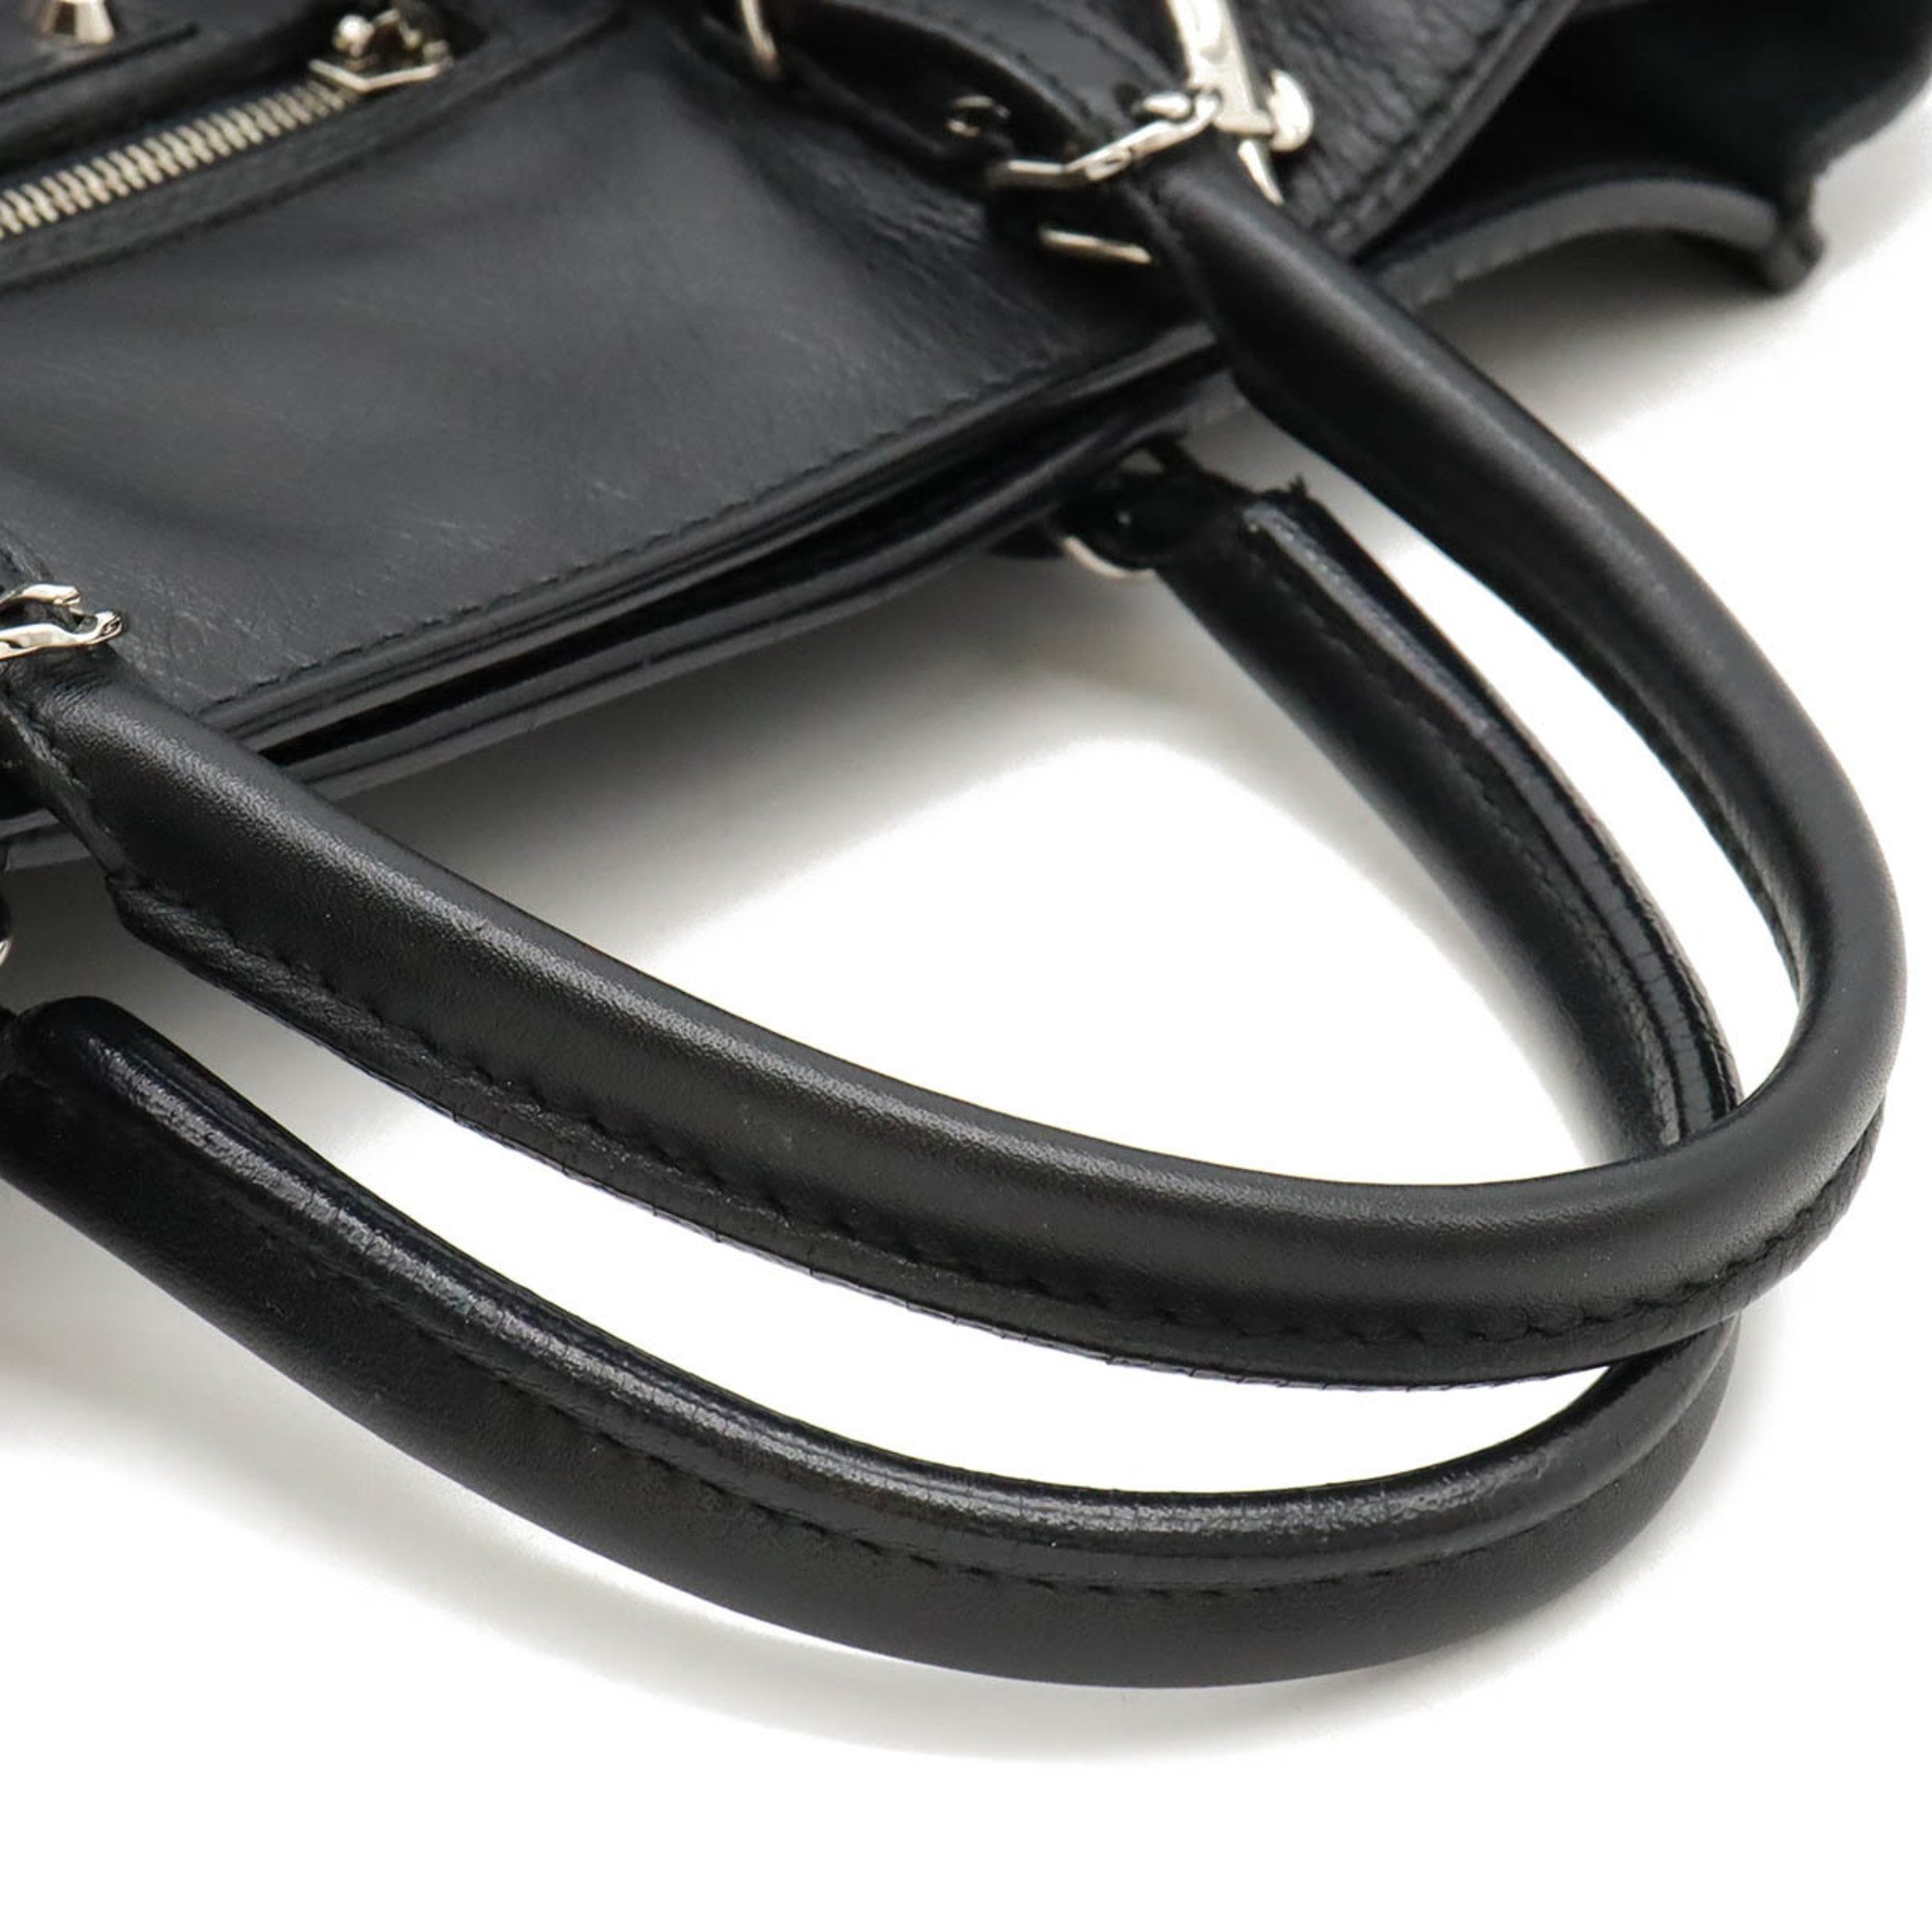 BALENCIAGA Paper A6 Zip Around Handbag Tote Bag Leather Black 370926